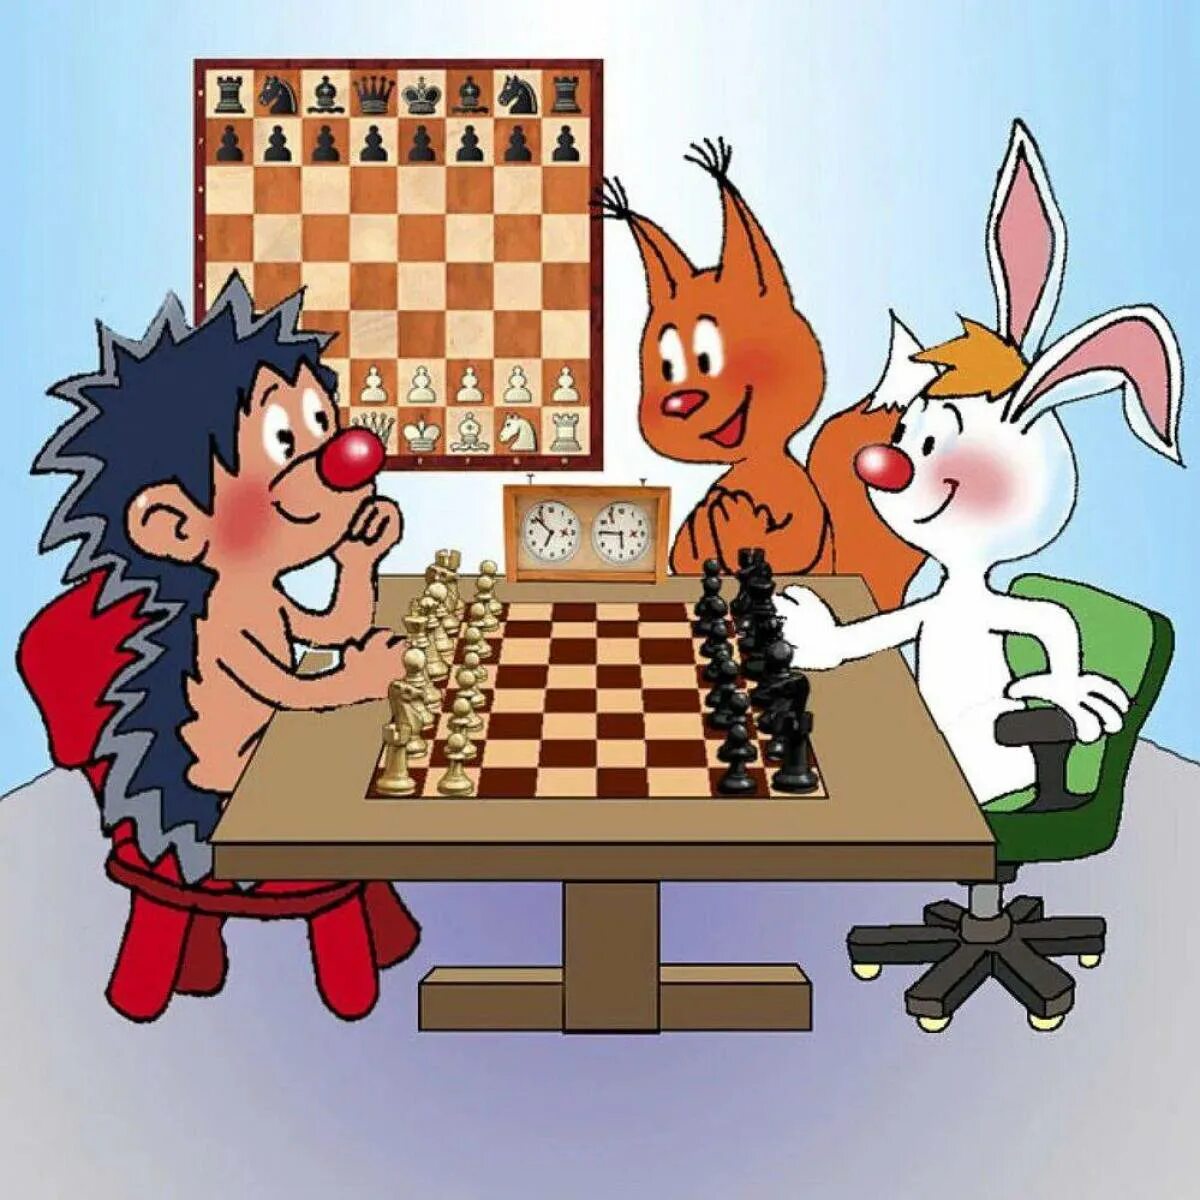 О шахмате. Рисунок на тему шахматы. Шахматы для детей. Шахматы для дошкольников. Игра в шахматы рисунок.